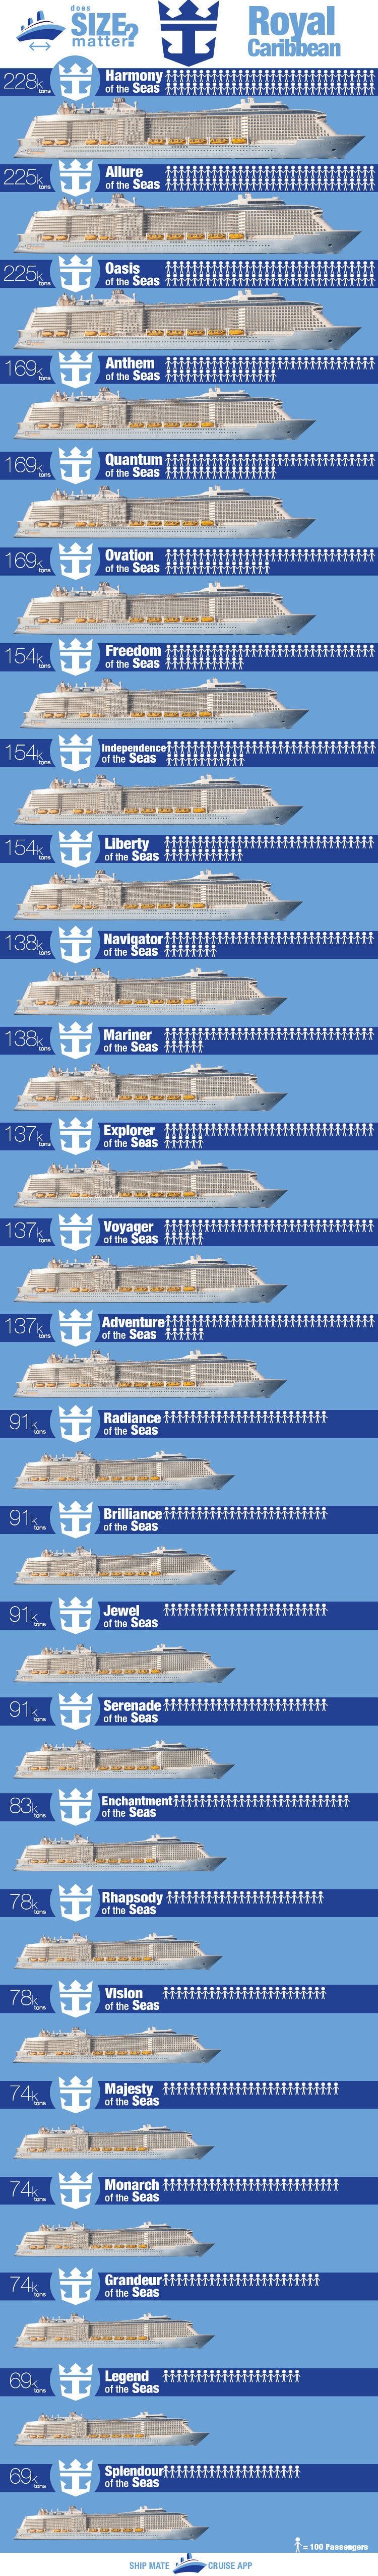 Royal Caribbean Ships by Size